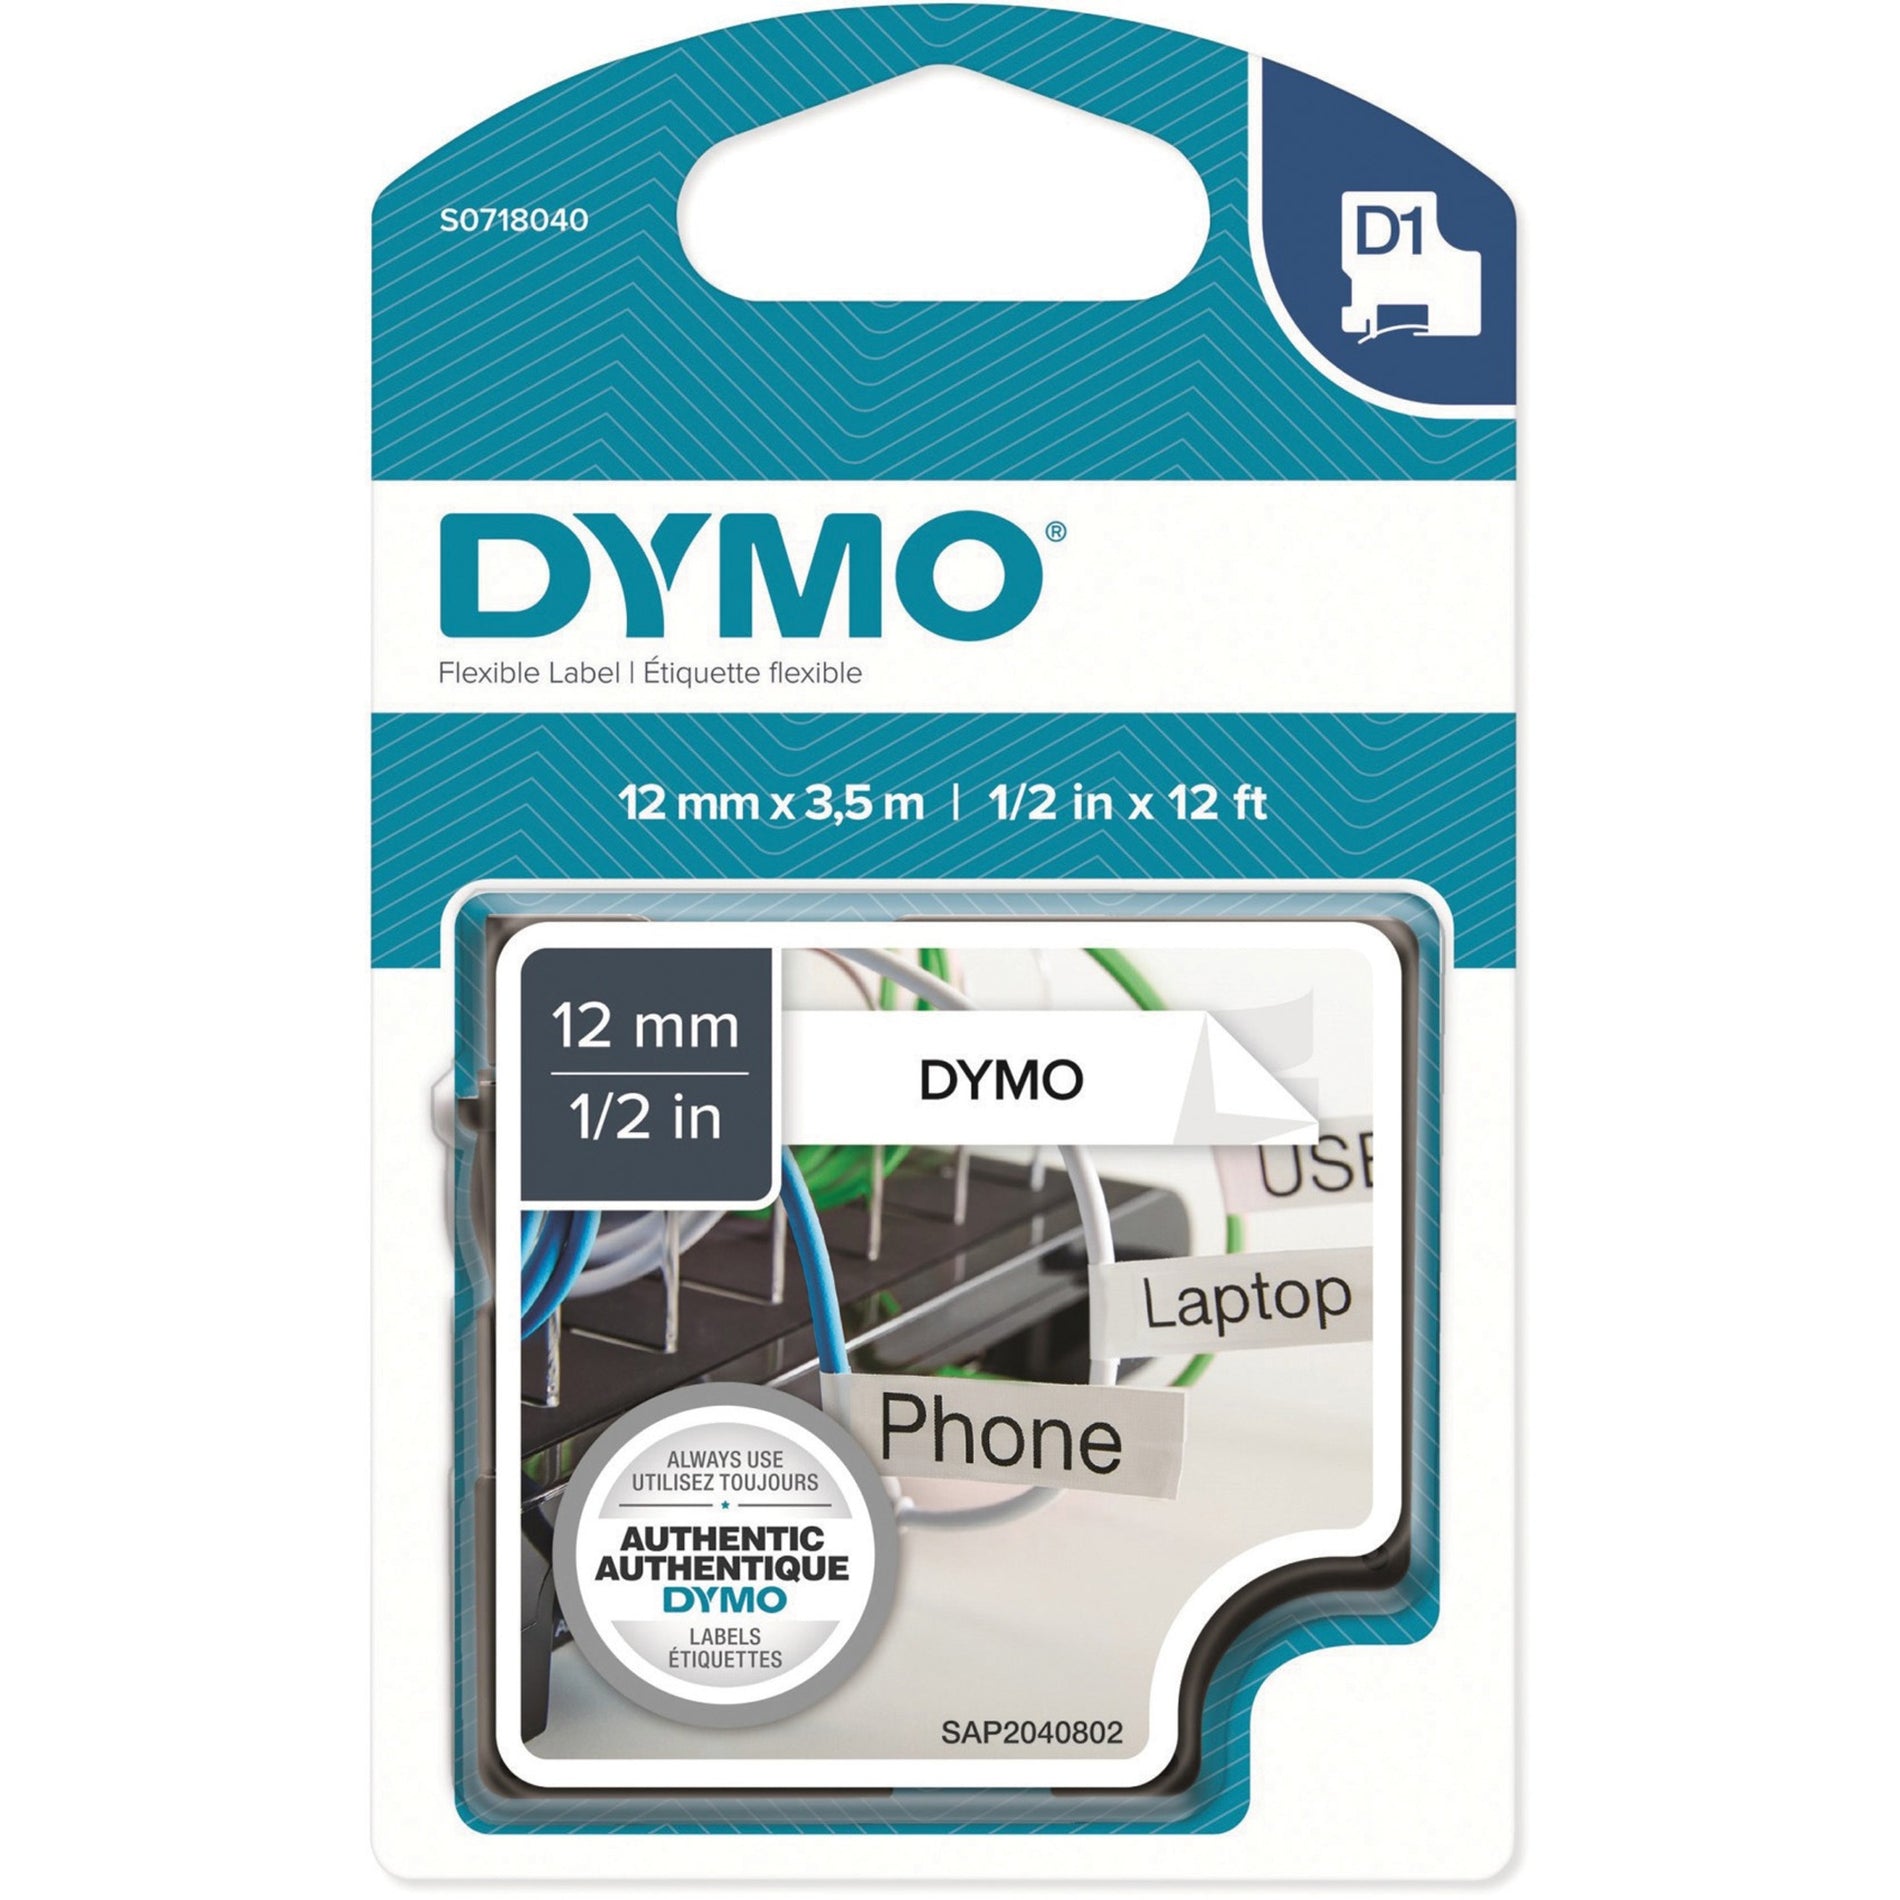 Dymo S0718040 D1 Flexible Nylontape 12mm, Self-adhesive, White/Black, Permanent Label Tape